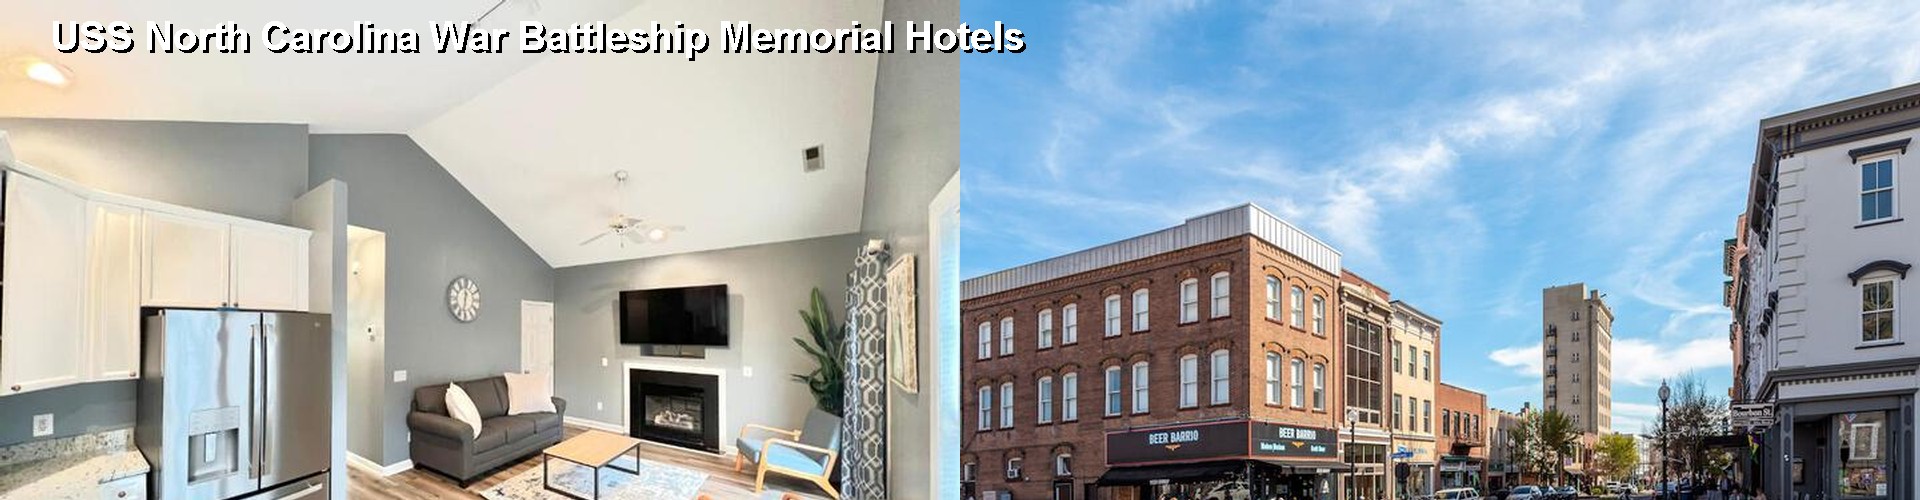 5 Best Hotels near USS North Carolina War Battleship Memorial